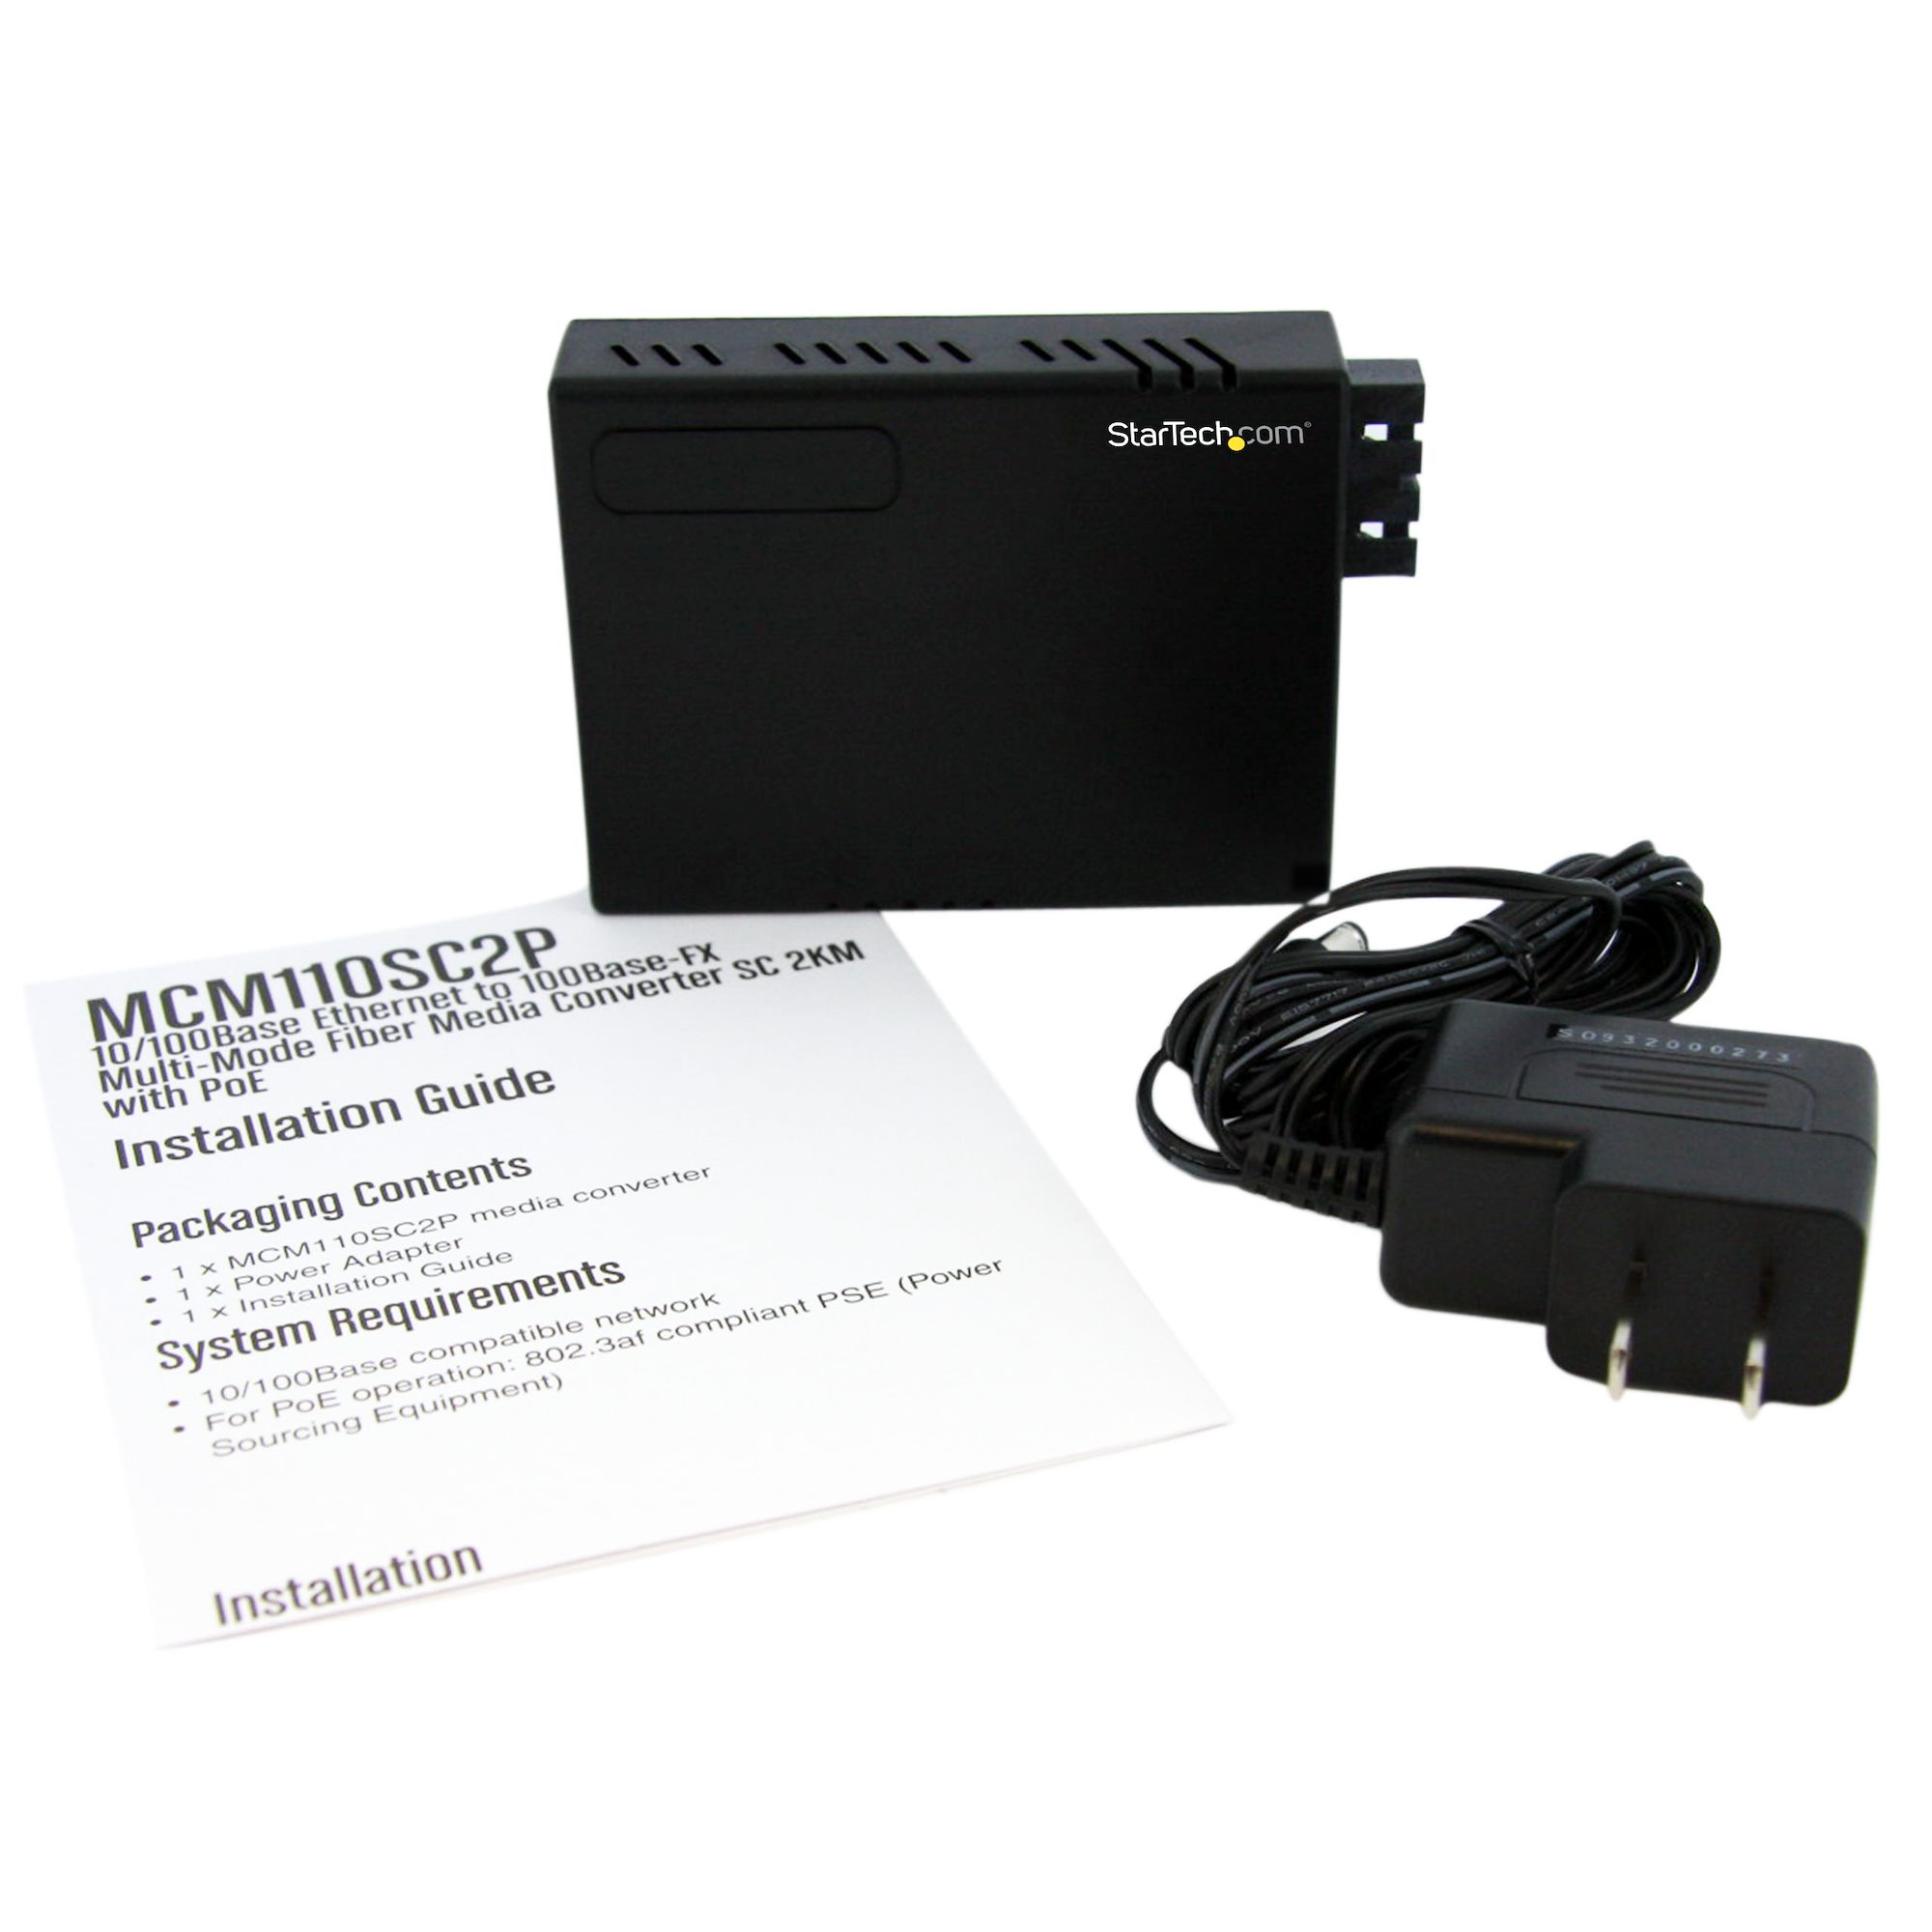 10/100 Multi Mode Fiber to Ethernet Media Converter SC 2km with PoE